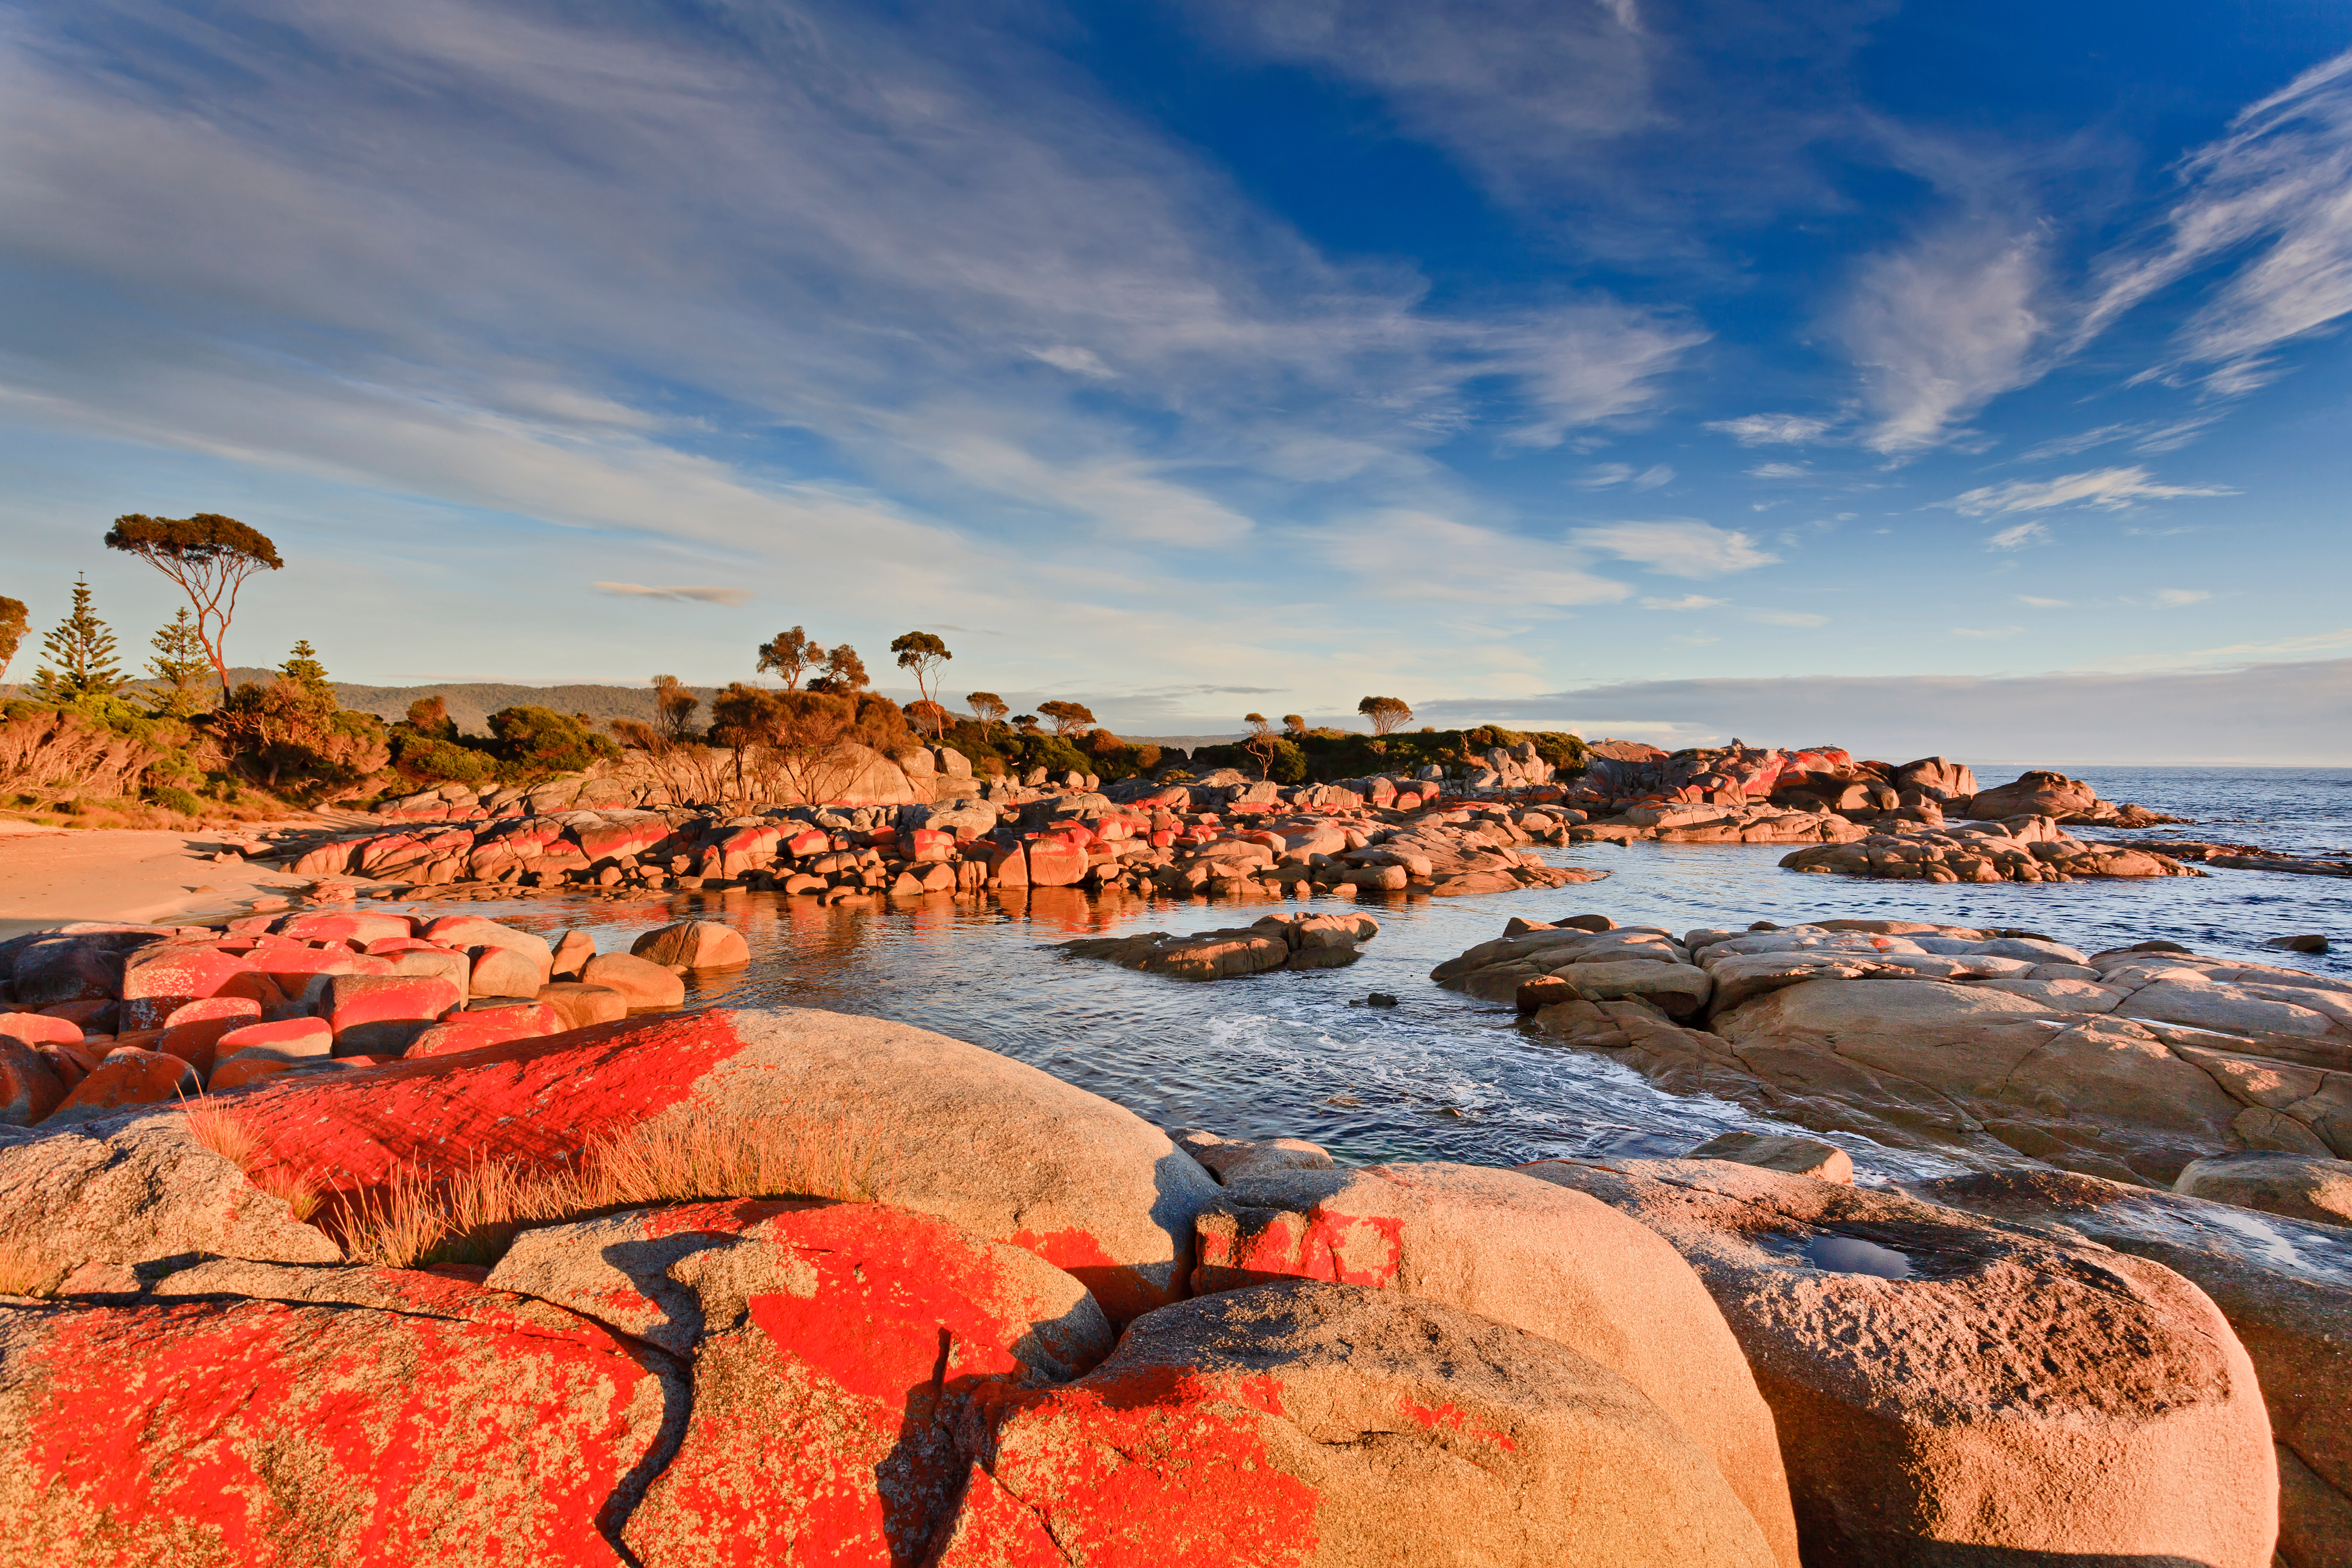 Australia Tasmania Bay of fires binalong bay red boulders at sunrise ocean coastline warm rising sunlight under blue sky